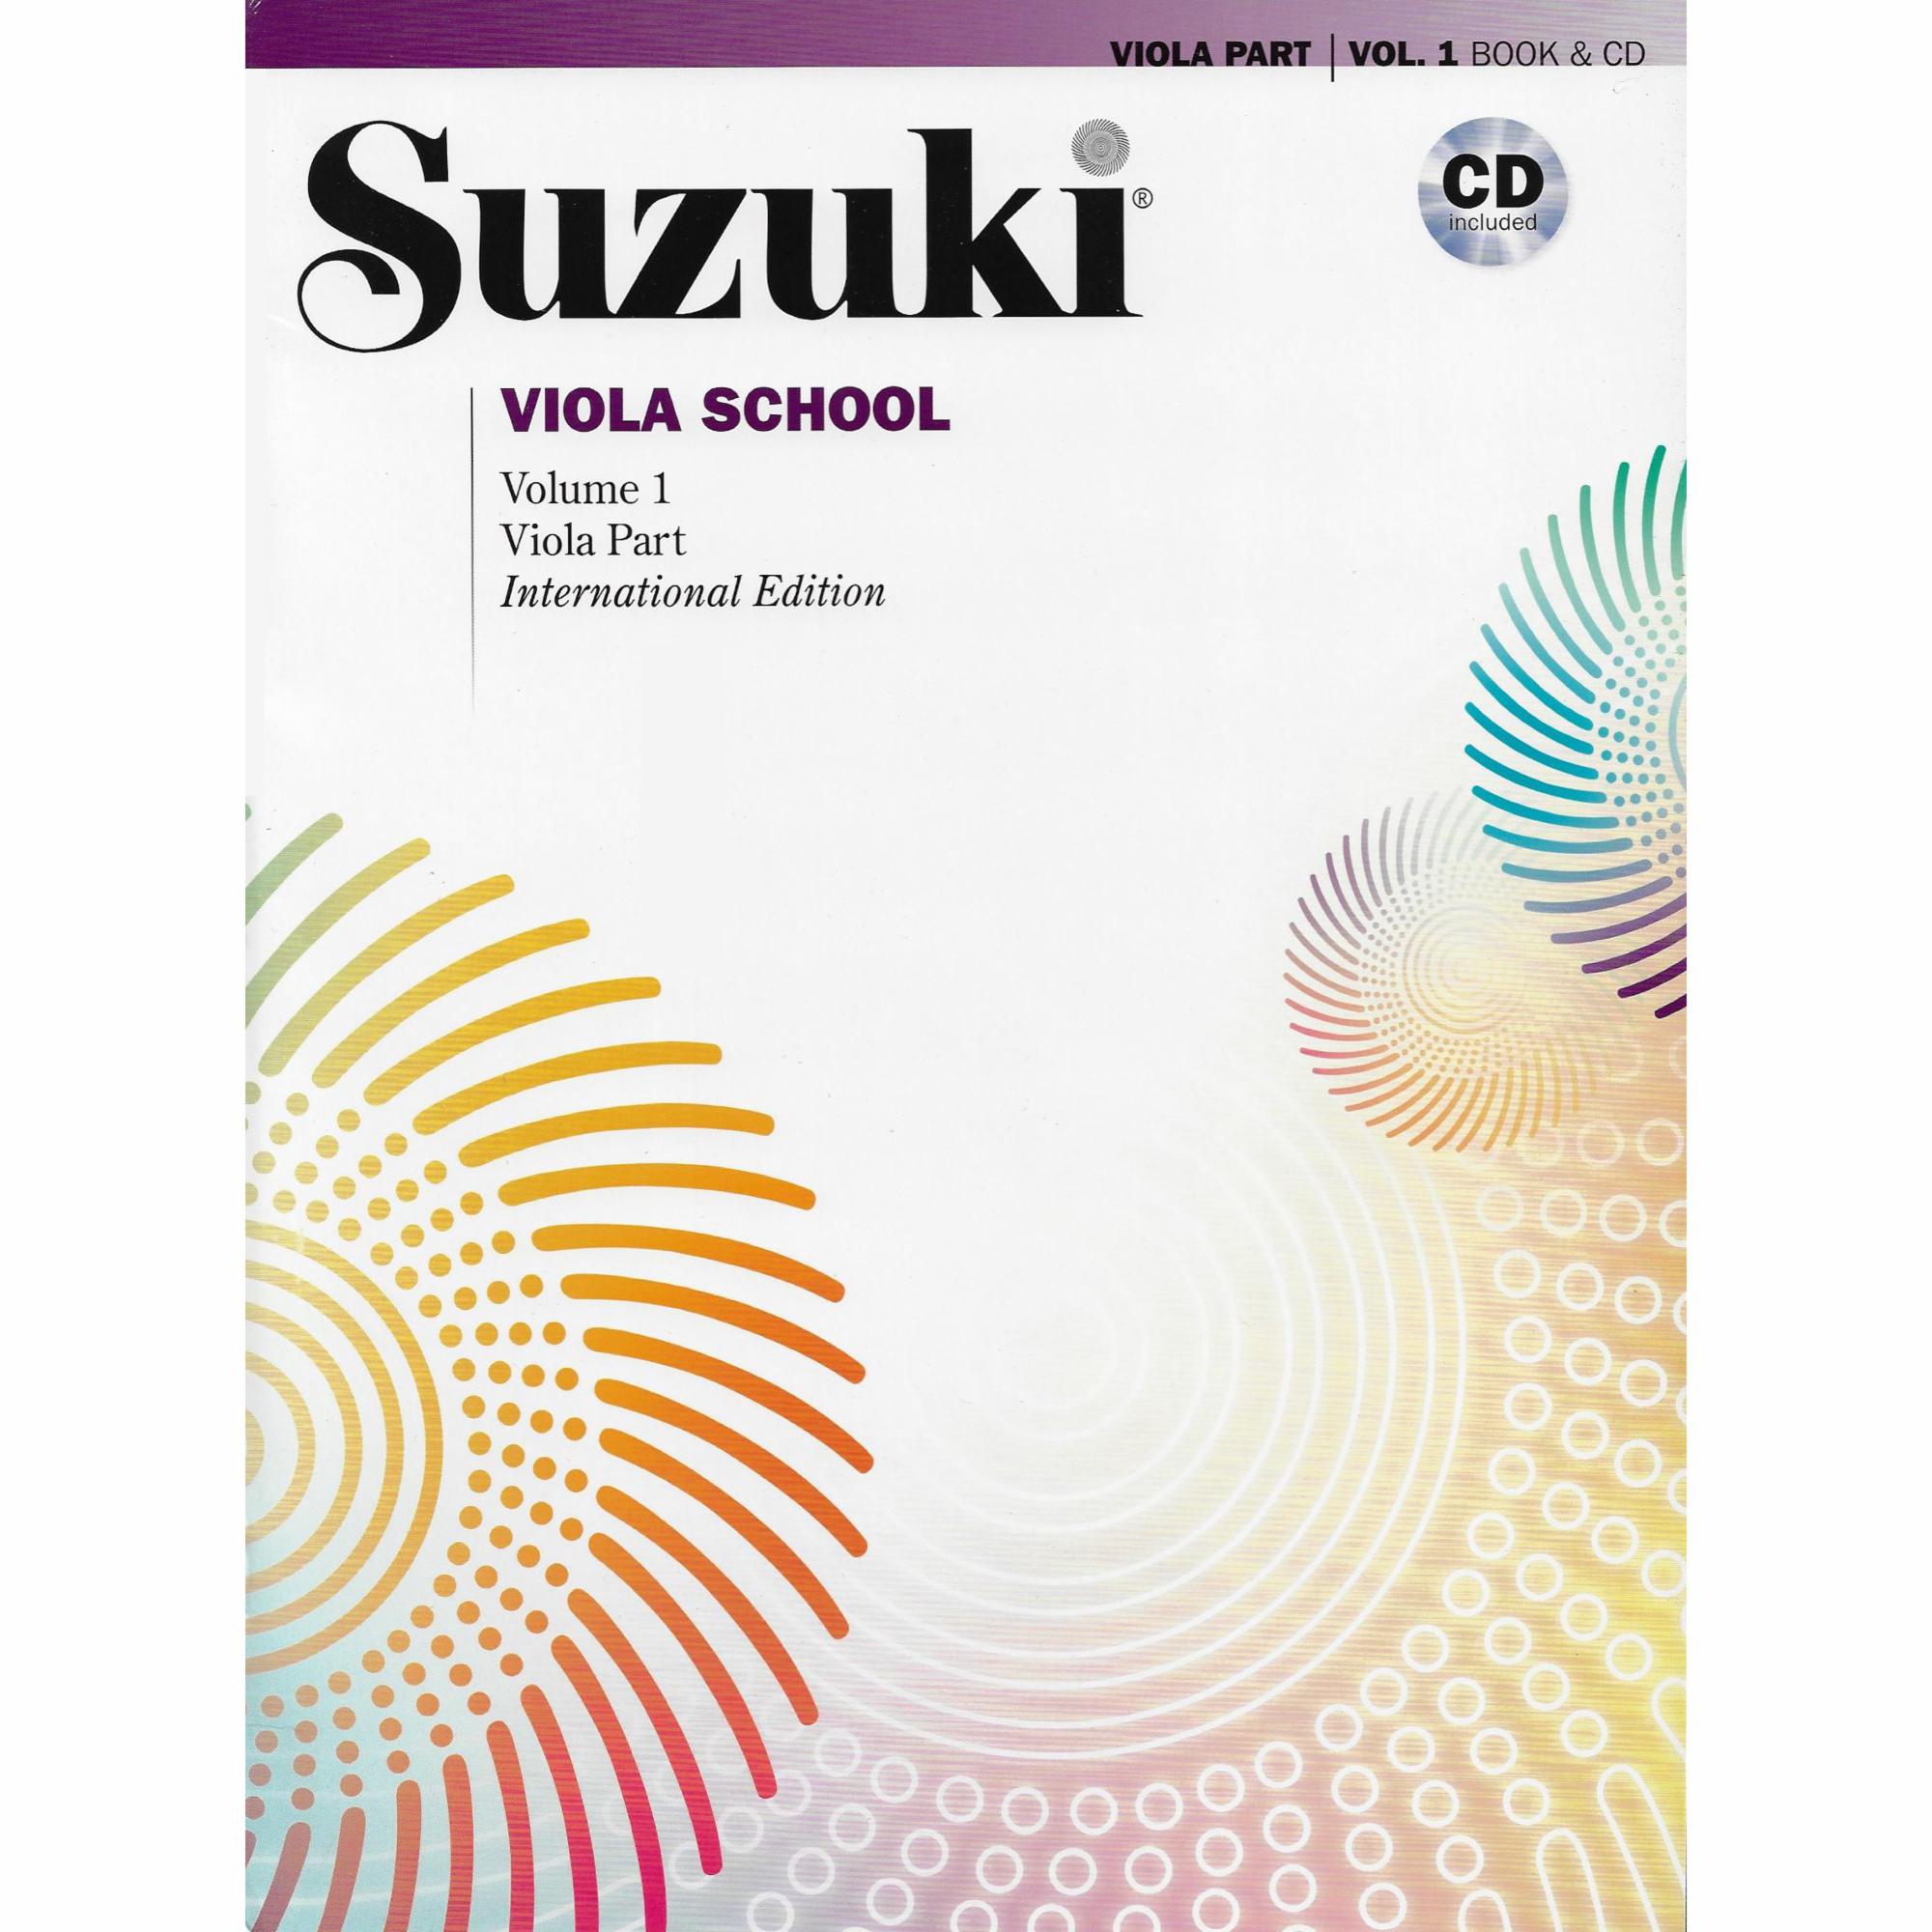 Suzuki Viola School: Viola Part and CD Combo Packs